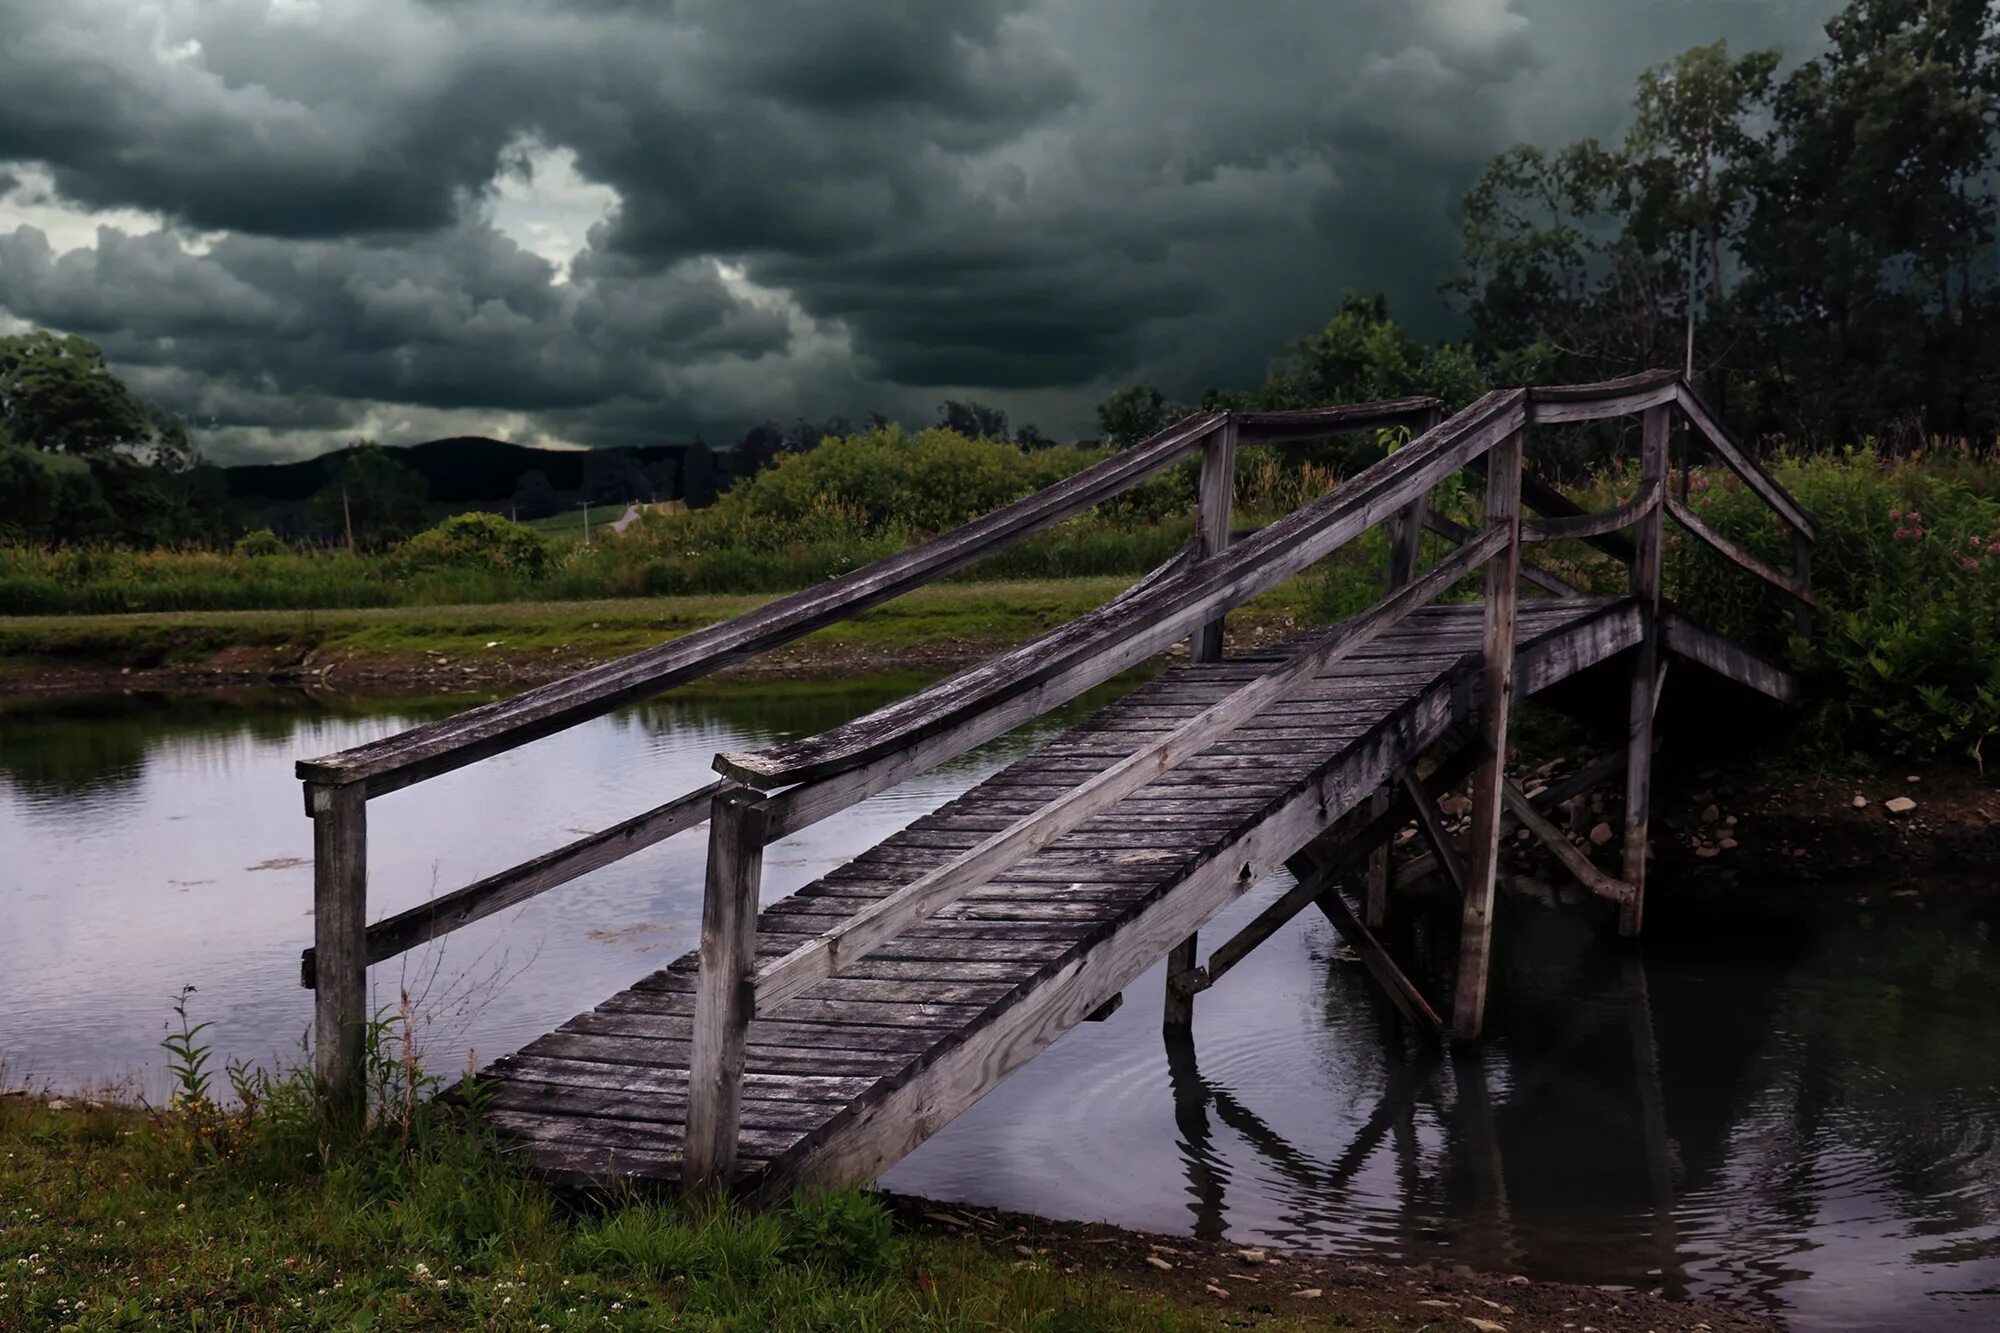 Деревянный мост. Старый деревянный мостик. Деревянный мост через реку. Деревянный мостик через речку.